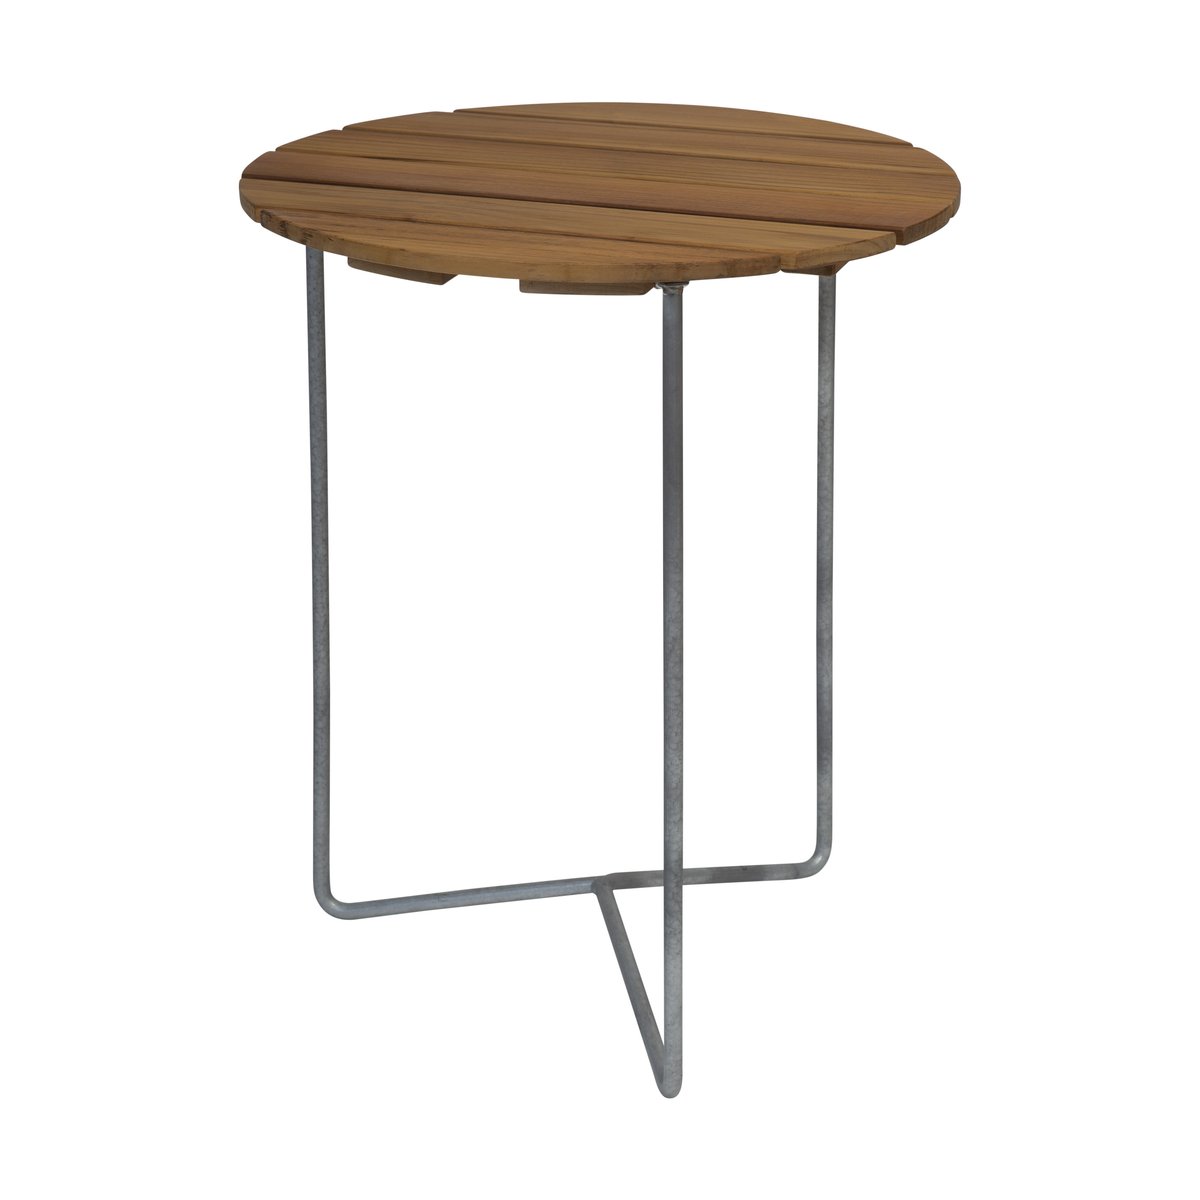 Grythyttan Stålmöbler Table 6B tafel Ø60 cm Onbehandeld teak - gegalvaniseerde poten